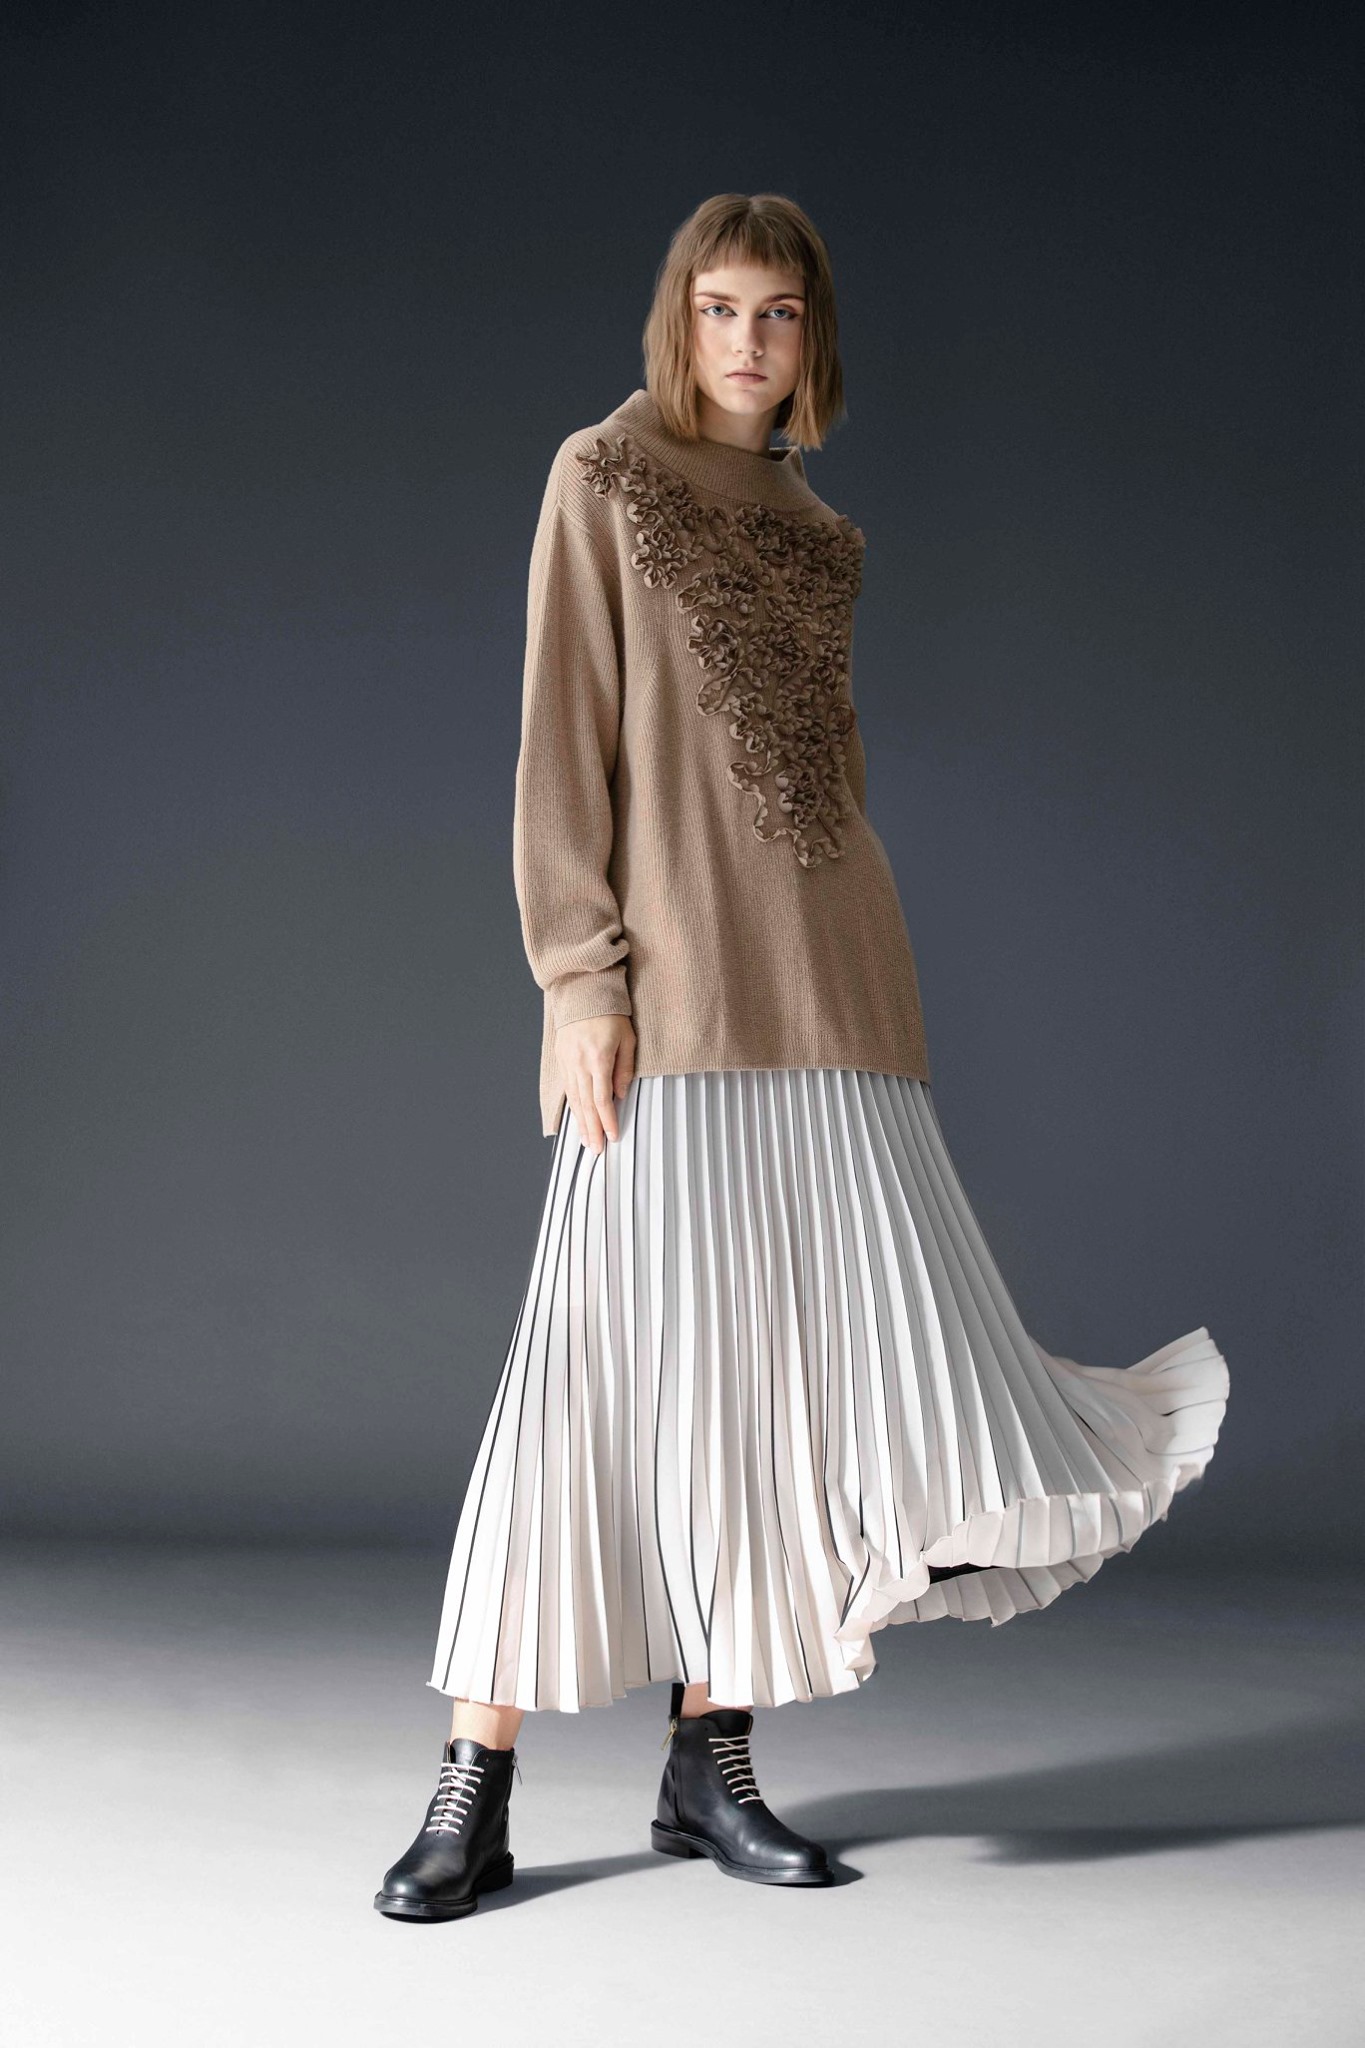 【Blossom In Winter】誰說花花元素就不能型格？Atsuro Tayama以其獨有的時尚美學，選用特大抽象立體花點綴觸感細膩、具光澤感的羊毛上衣，完美結合浪漫與前衛風格。 更多Atsuro Tayama單品在Sidefame網店發售﹕